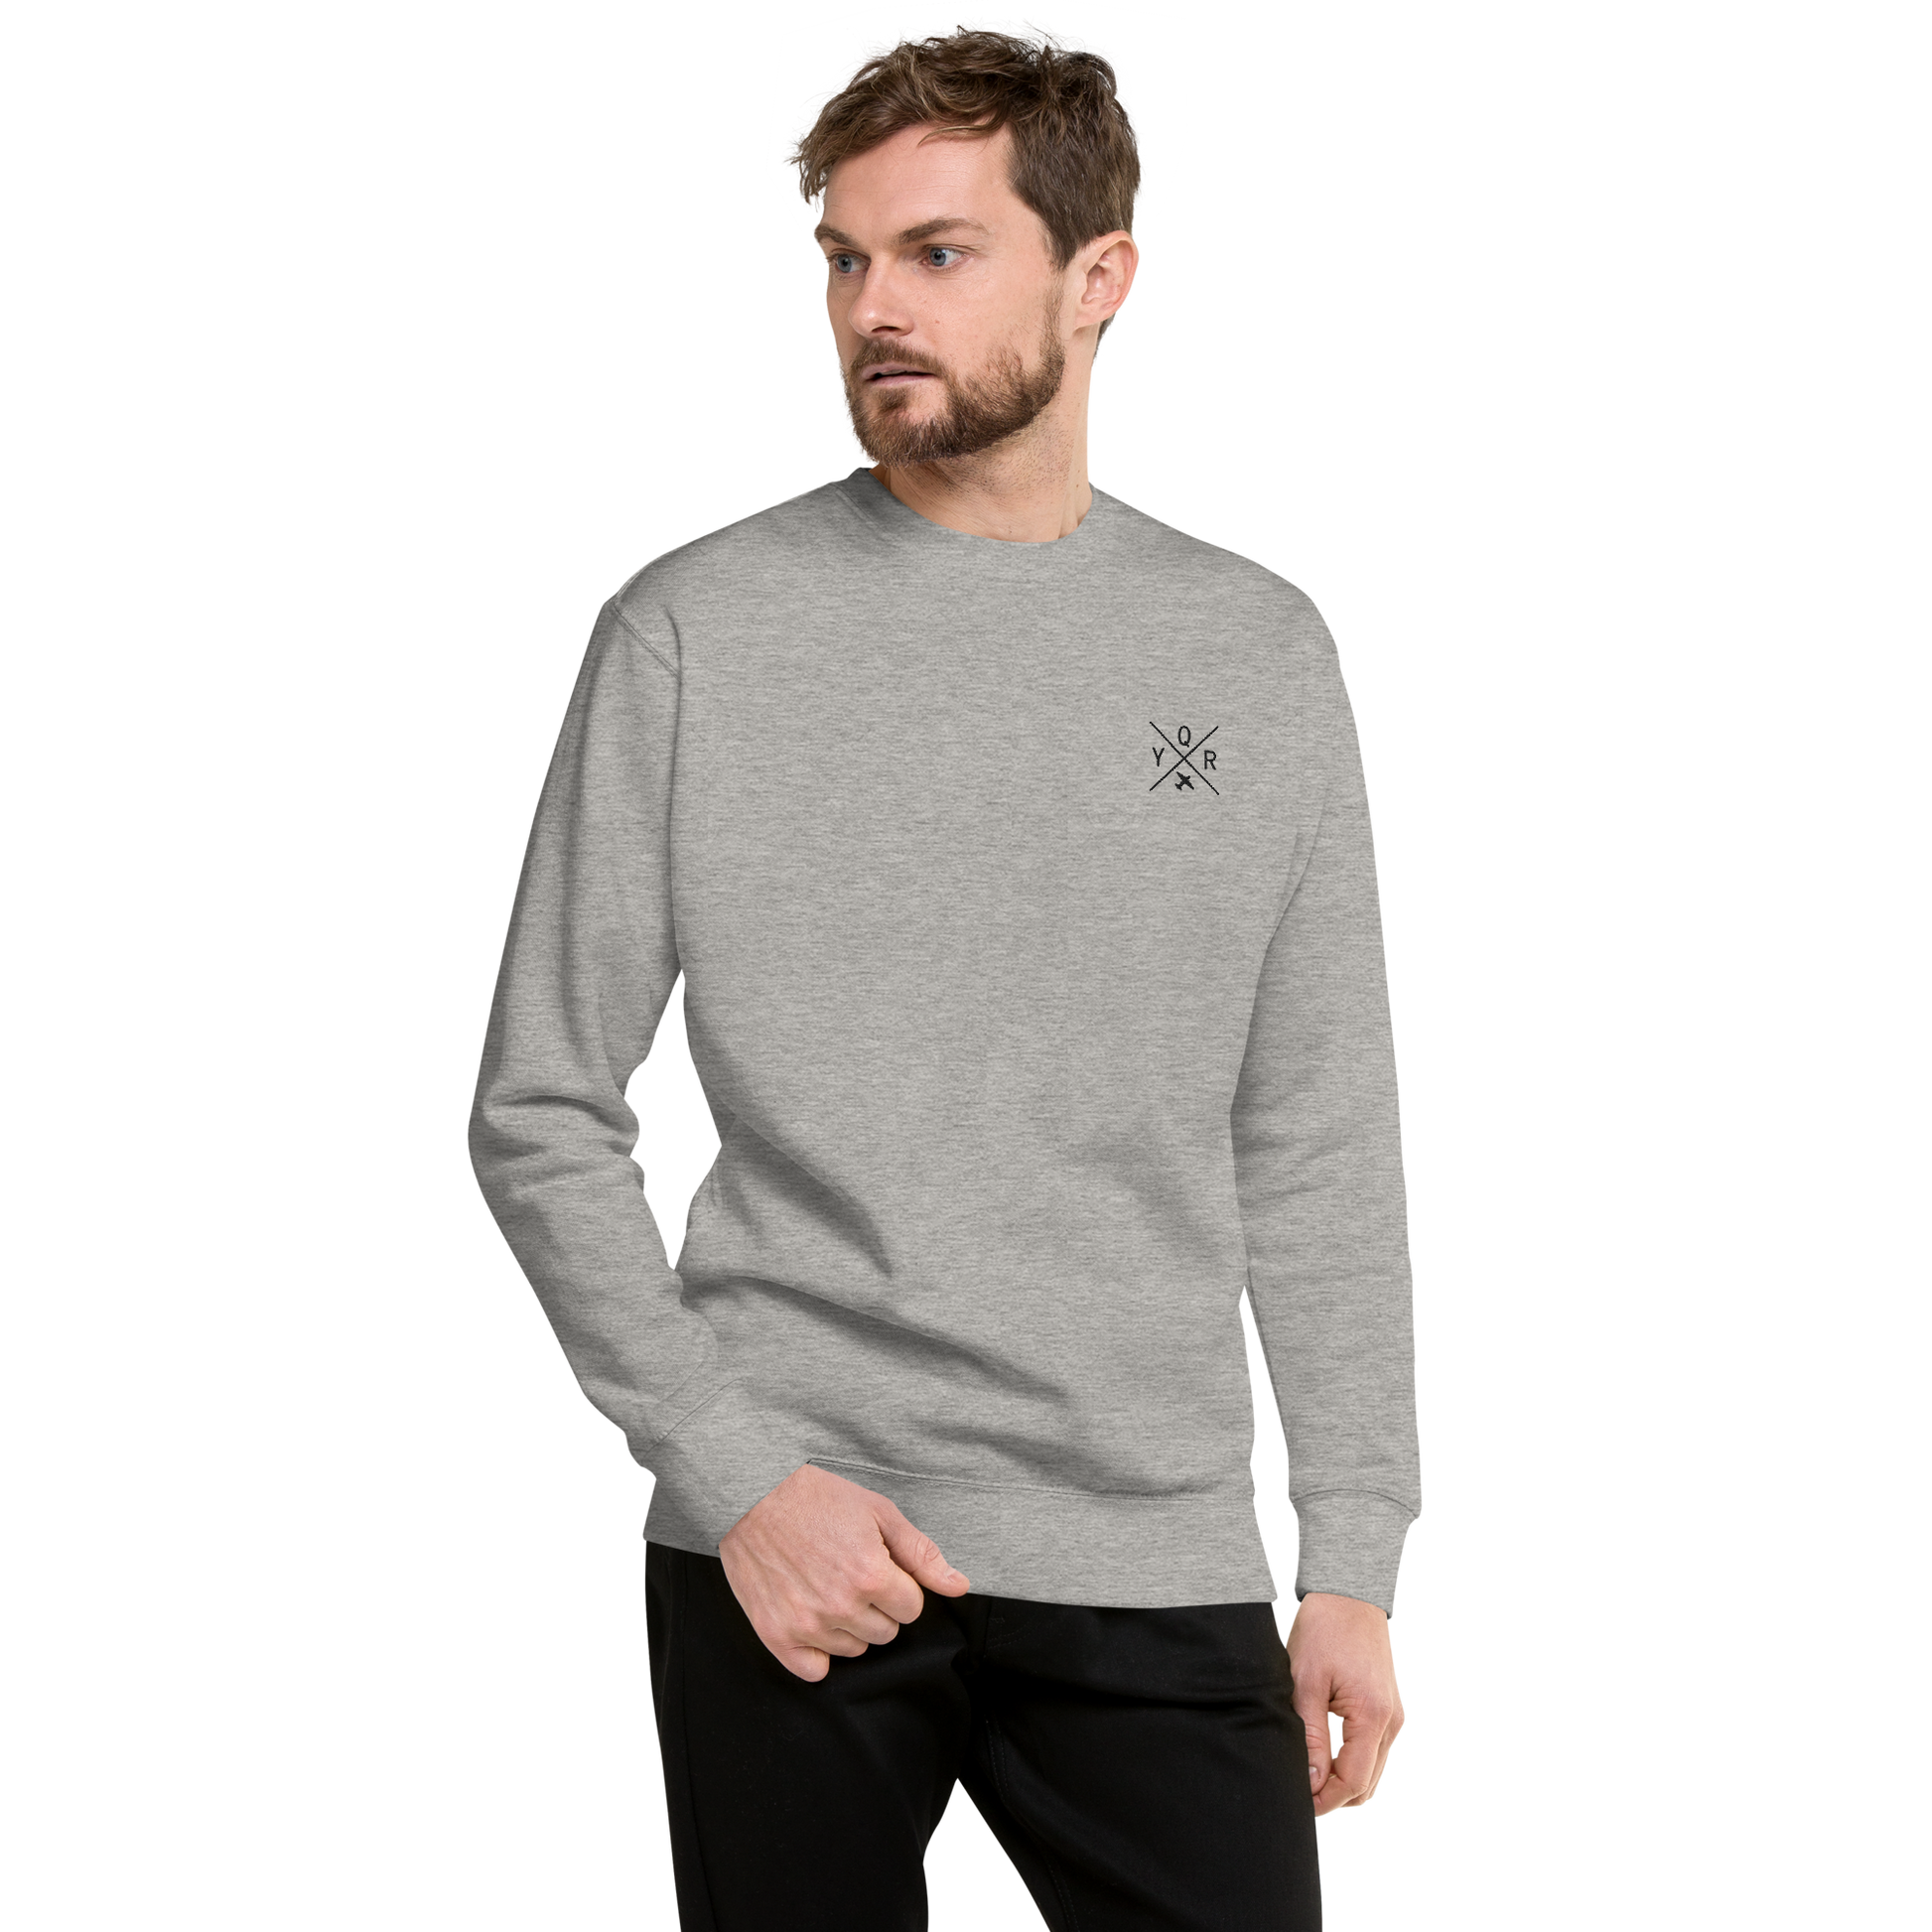 YHM Designs - YQR Regina Premium Sweatshirt - Crossed-X Design with Airport Code and Vintage Propliner - Black Embroidery - Image 01